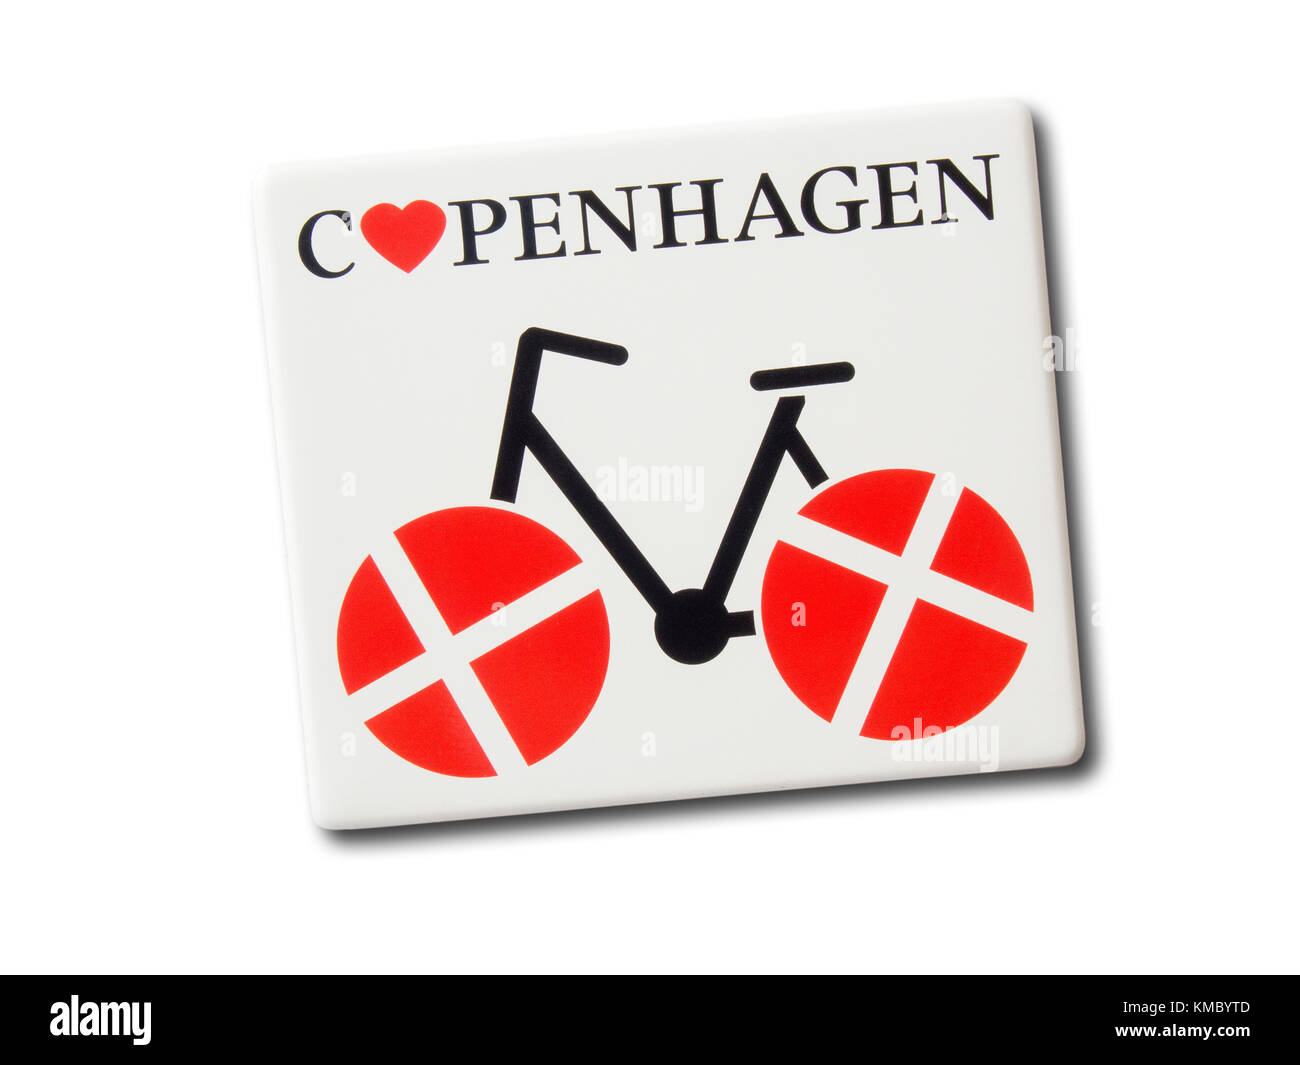 Copenhagen souvenir refrigerator magnet isolated on white background Stock Photo